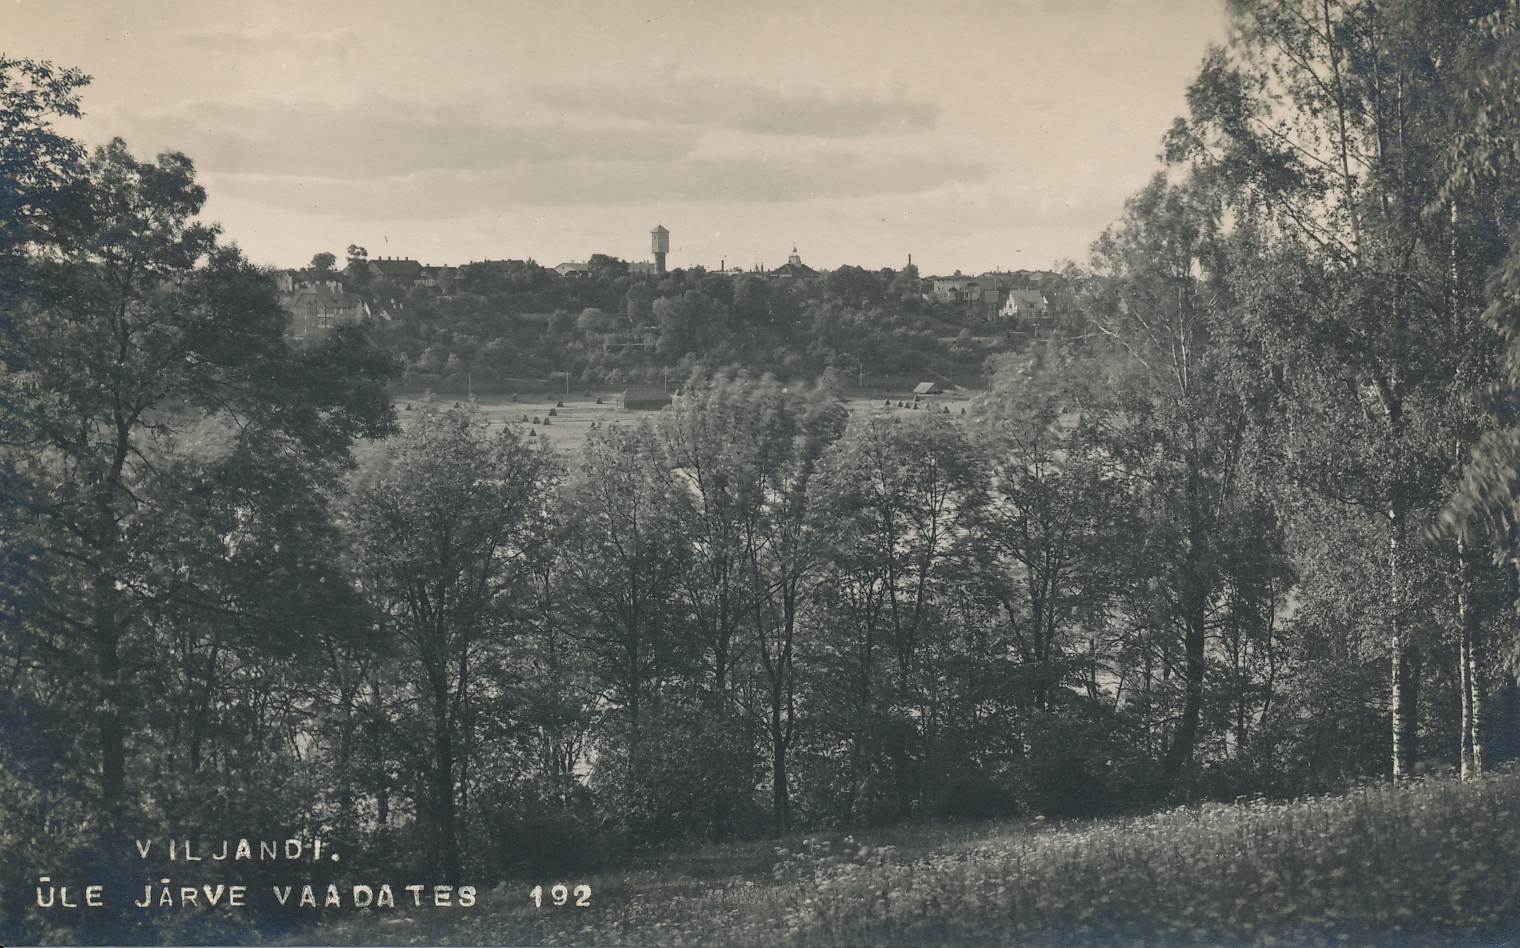 foto, Viljandi, linn järve vastaskaldalt, u 1920, foto J. Riet